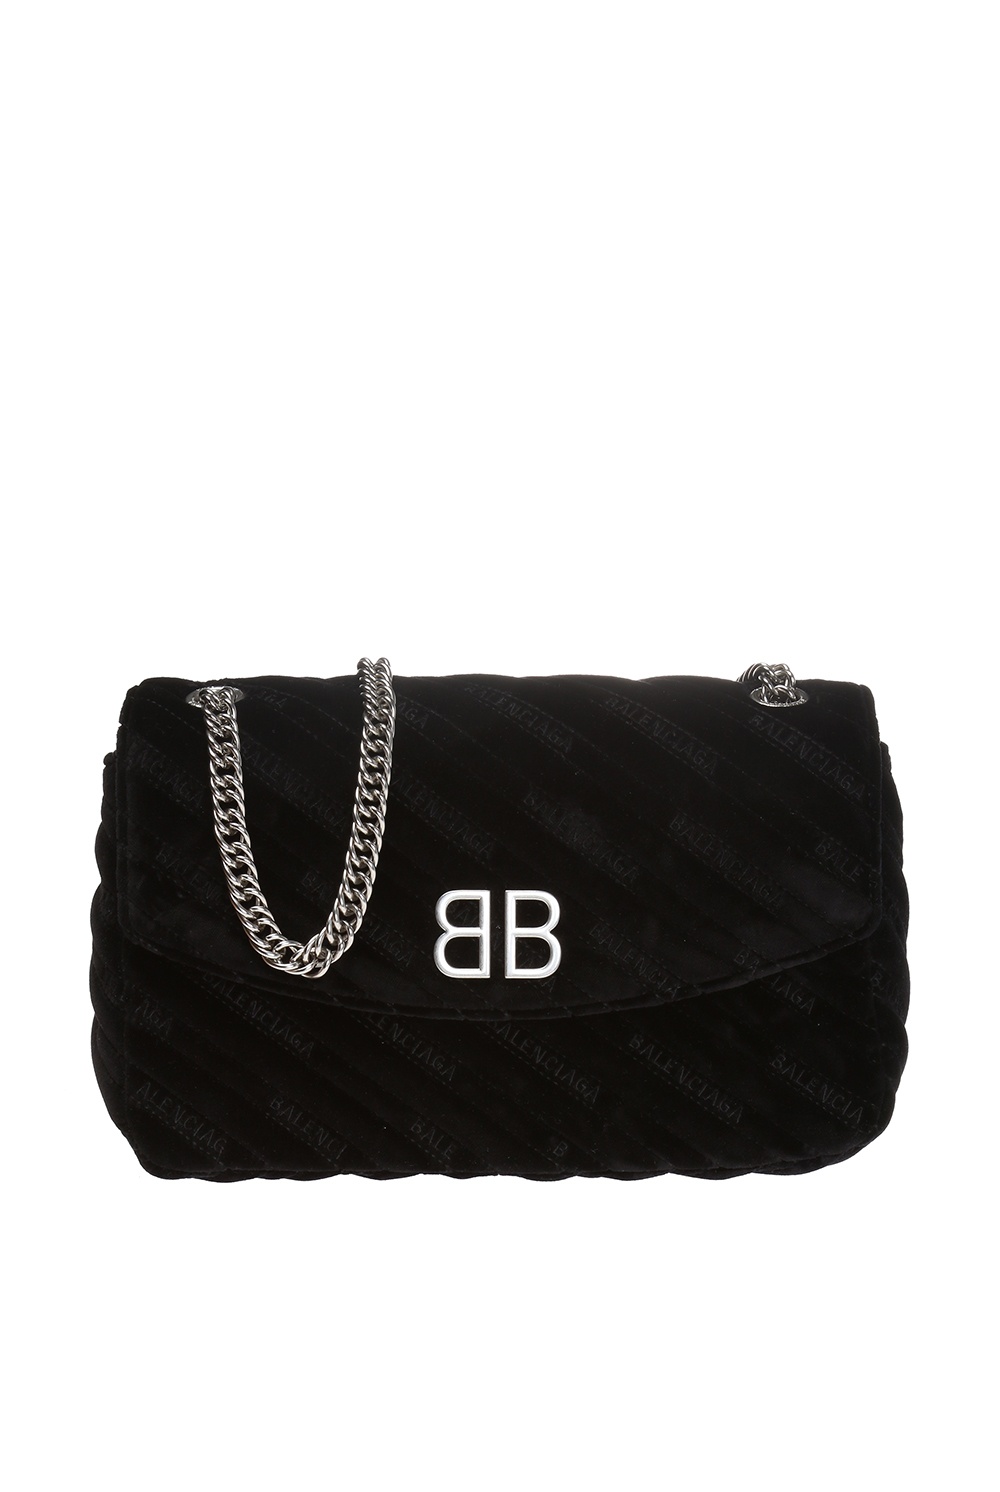 &#39;BB&#39; quilted bag with a logo Balenciaga - Vitkac US